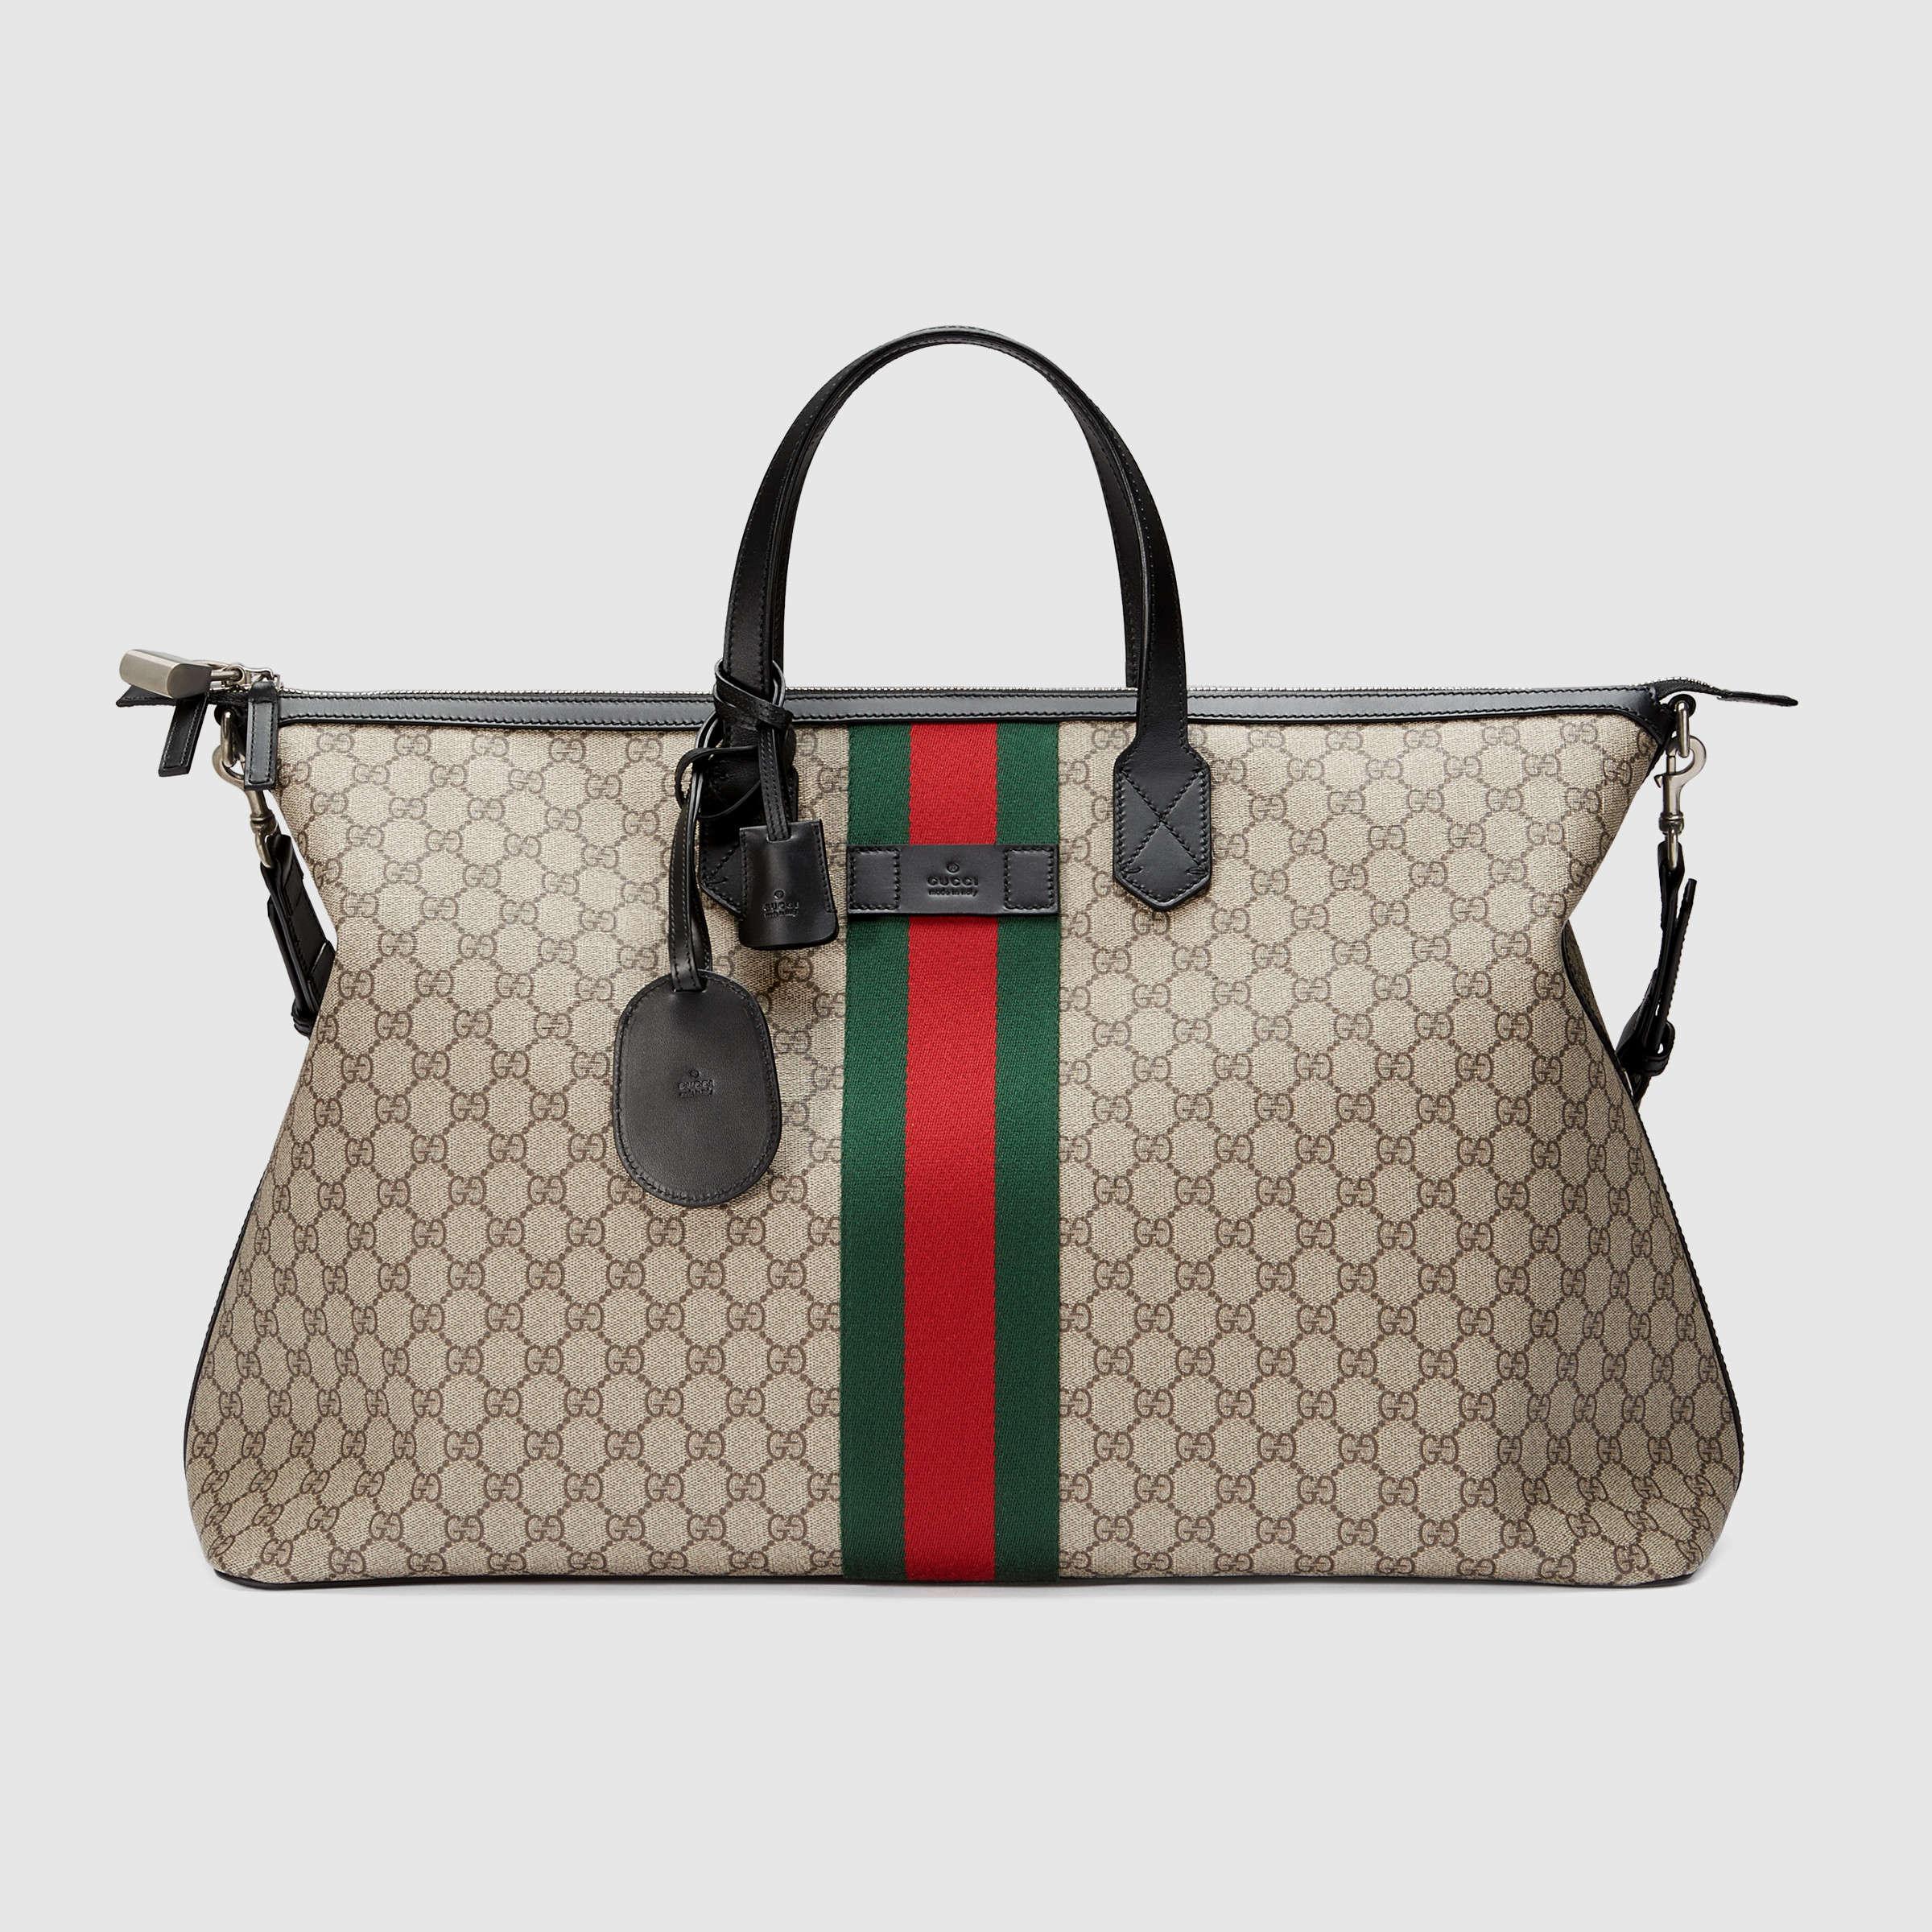 Lyst - Gucci Web GG Supreme Duffel Bag in Gray